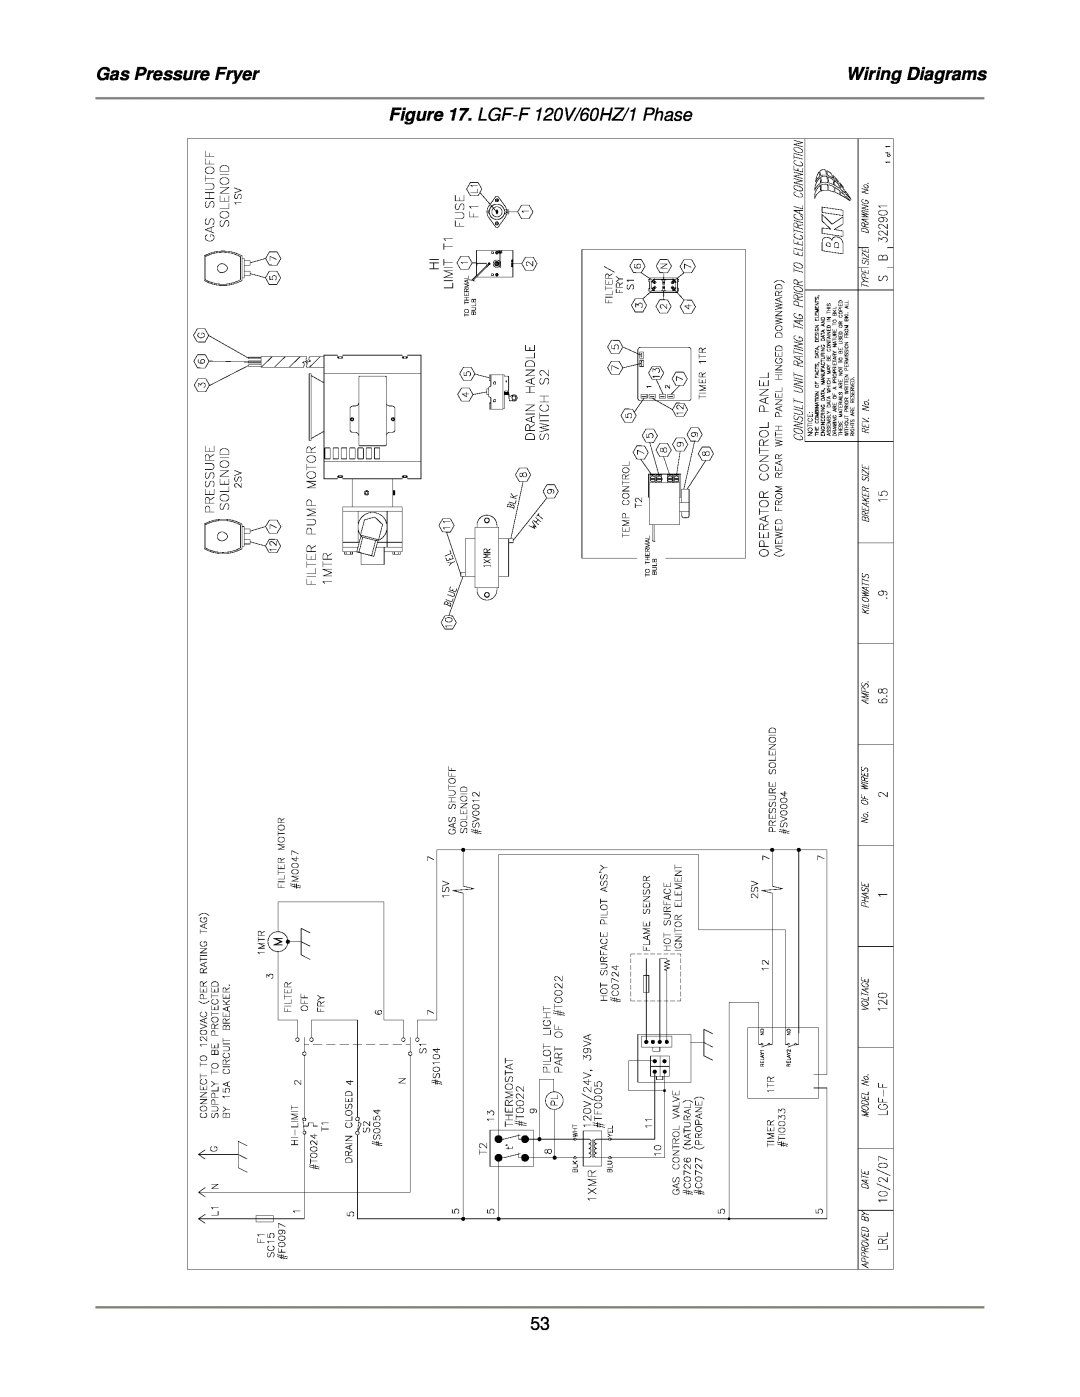 Bakers Pride Oven LGF-FC service manual Gas Pressure Fryer, Wiring Diagrams, LGF-F120V/60HZ/1 Phase 